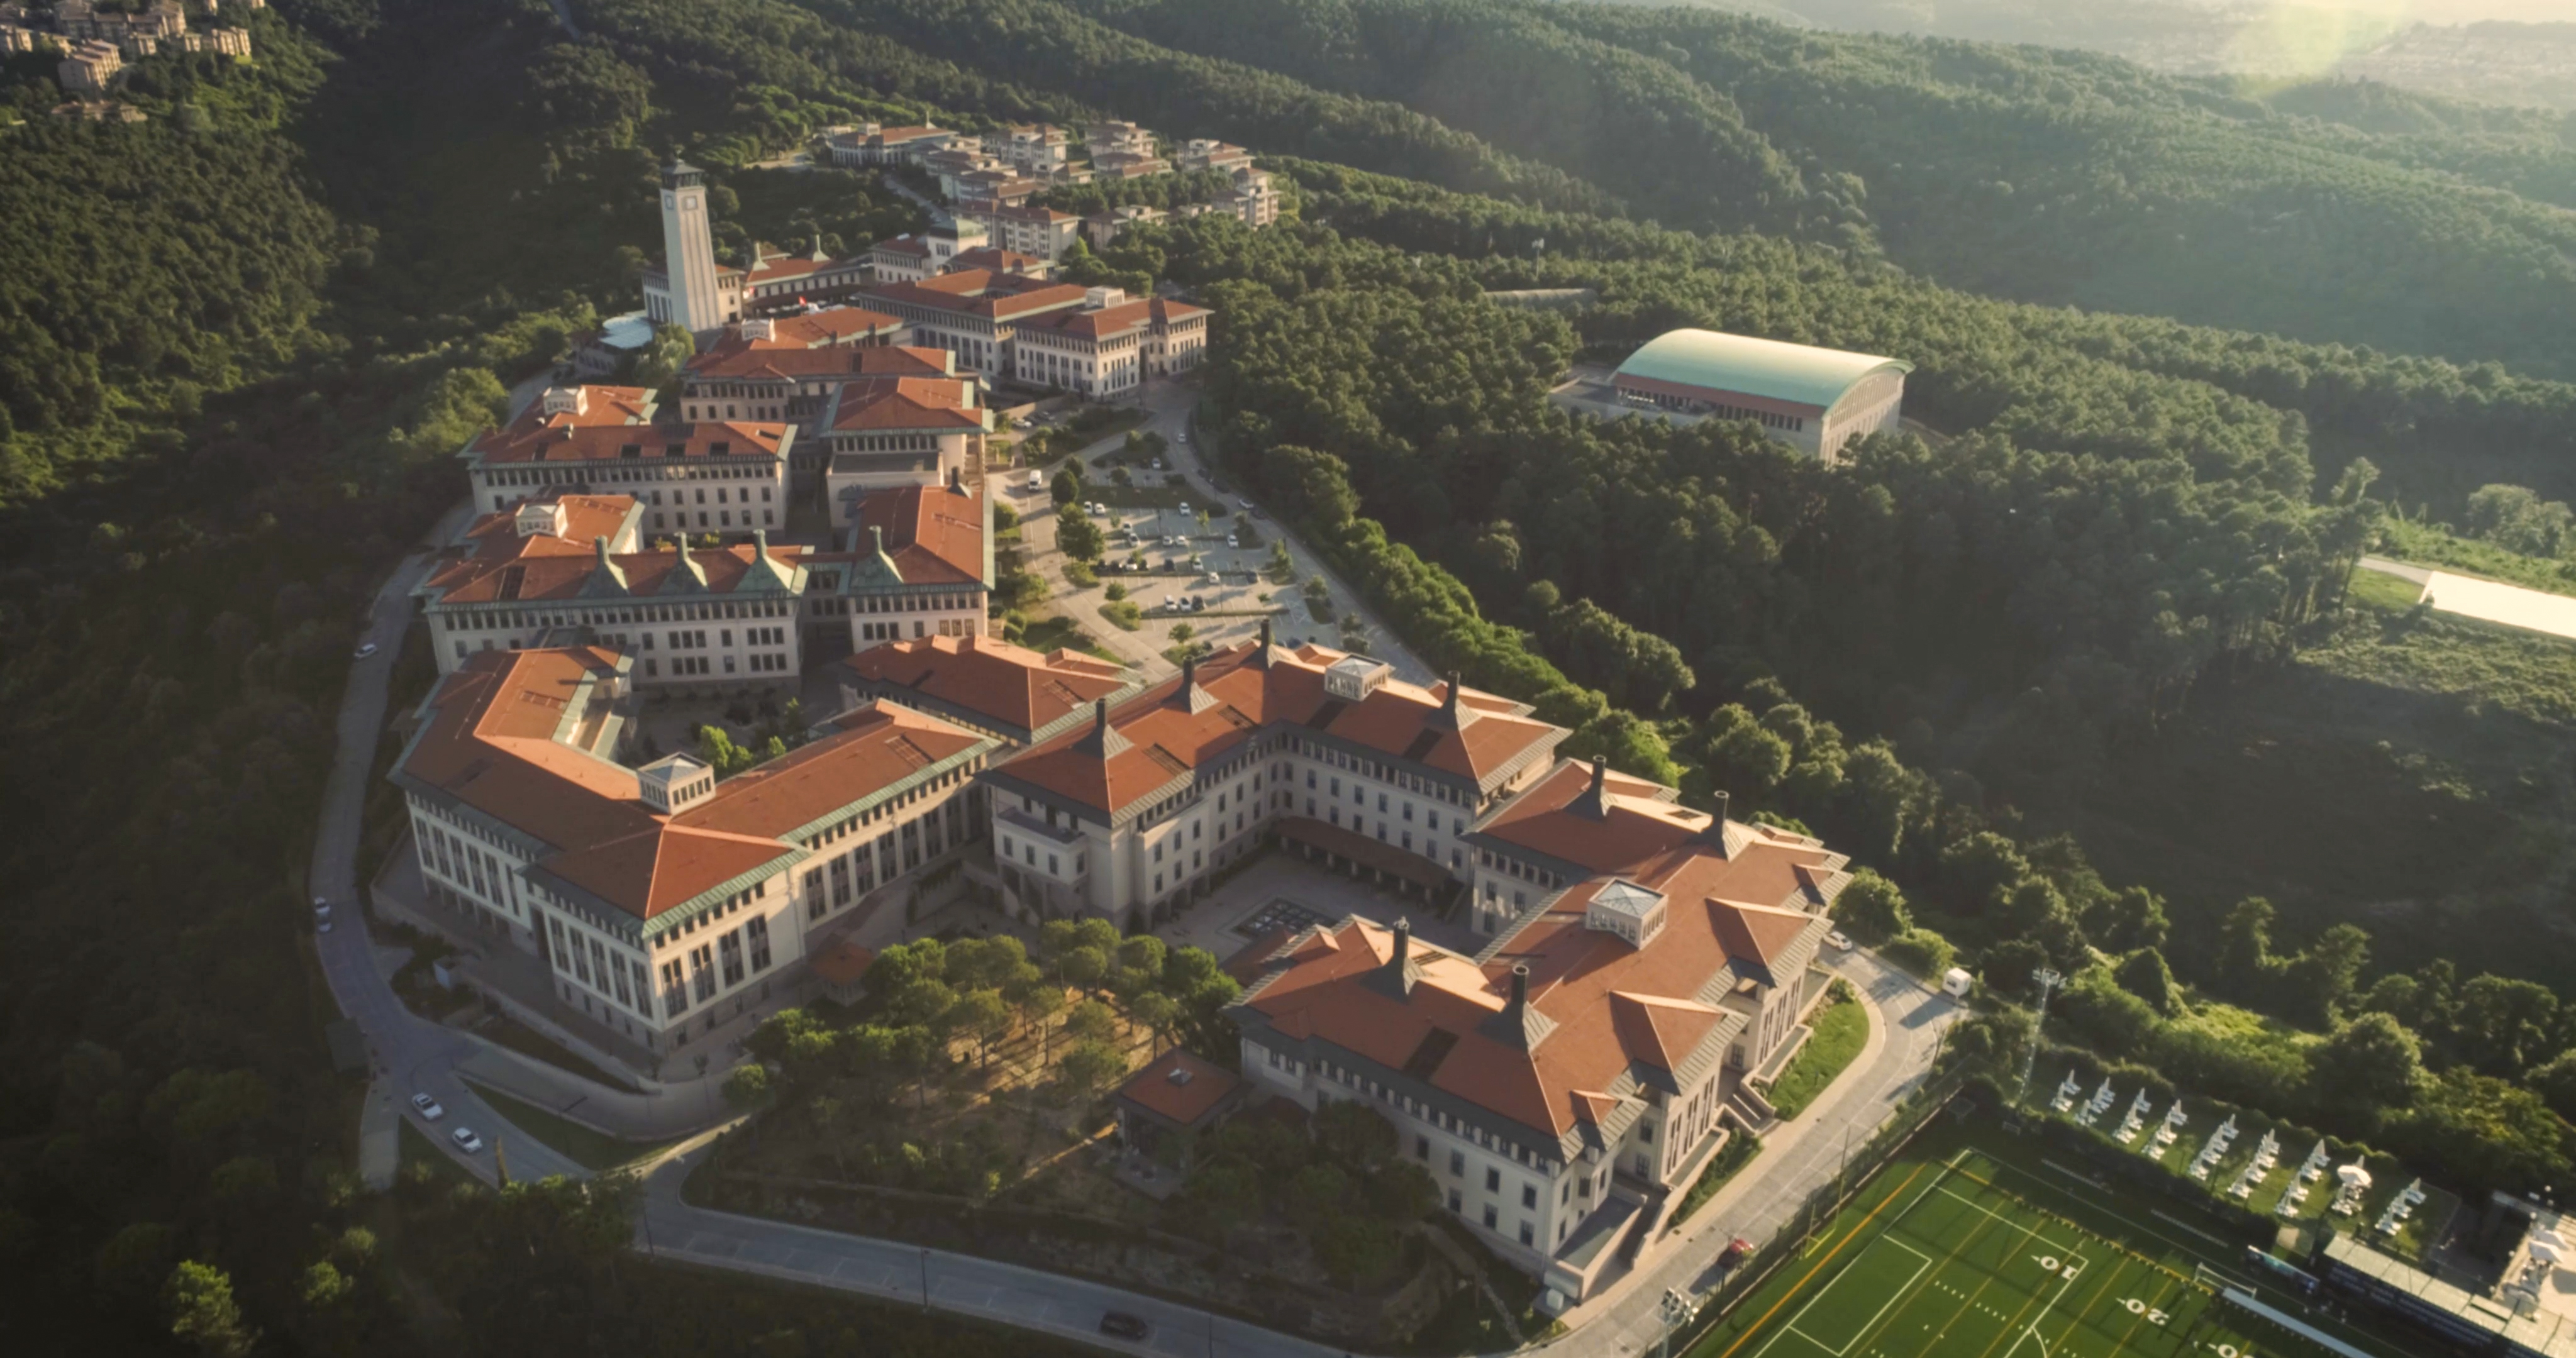 image of the university